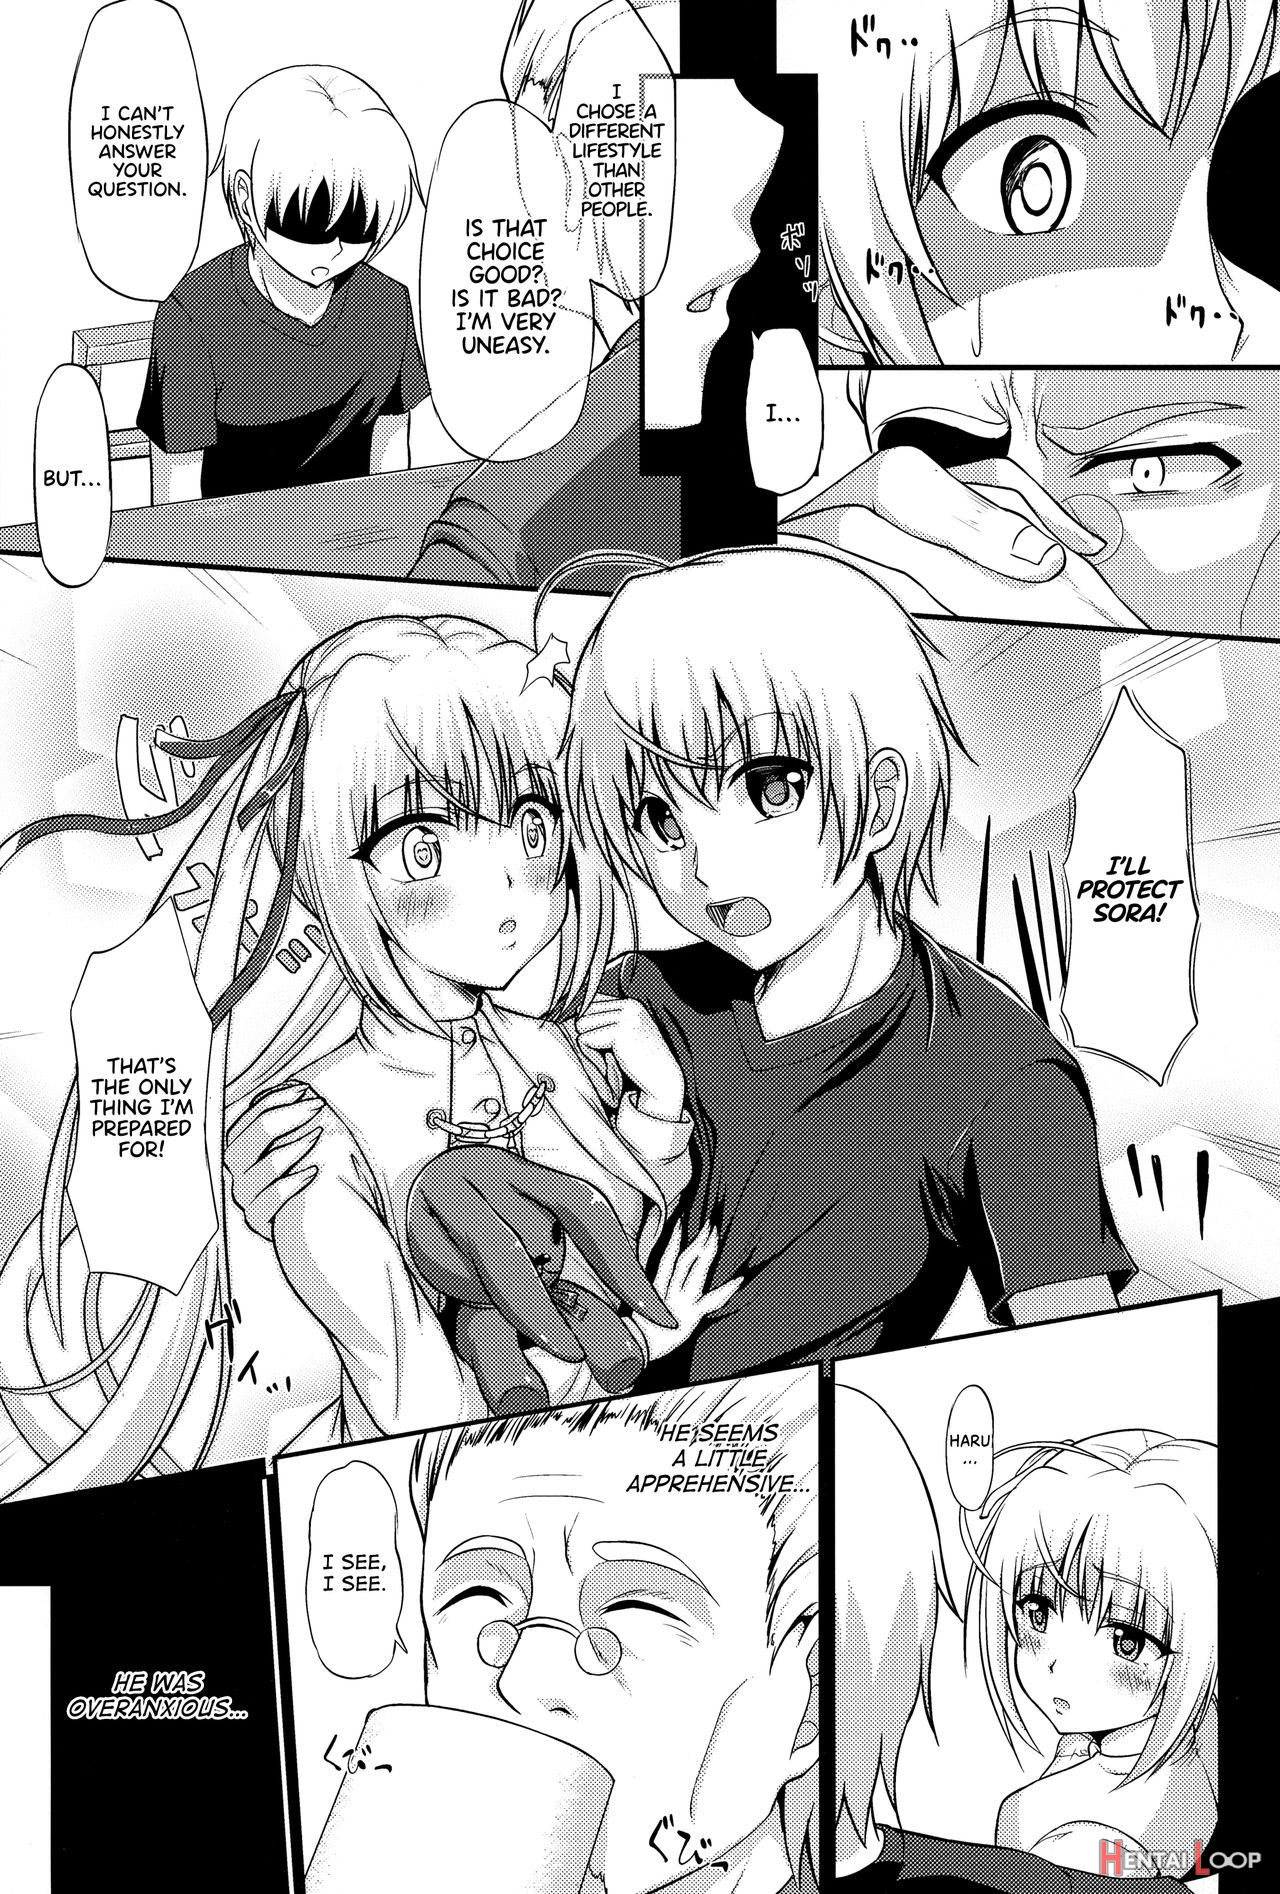 Enishi No Sora page 9